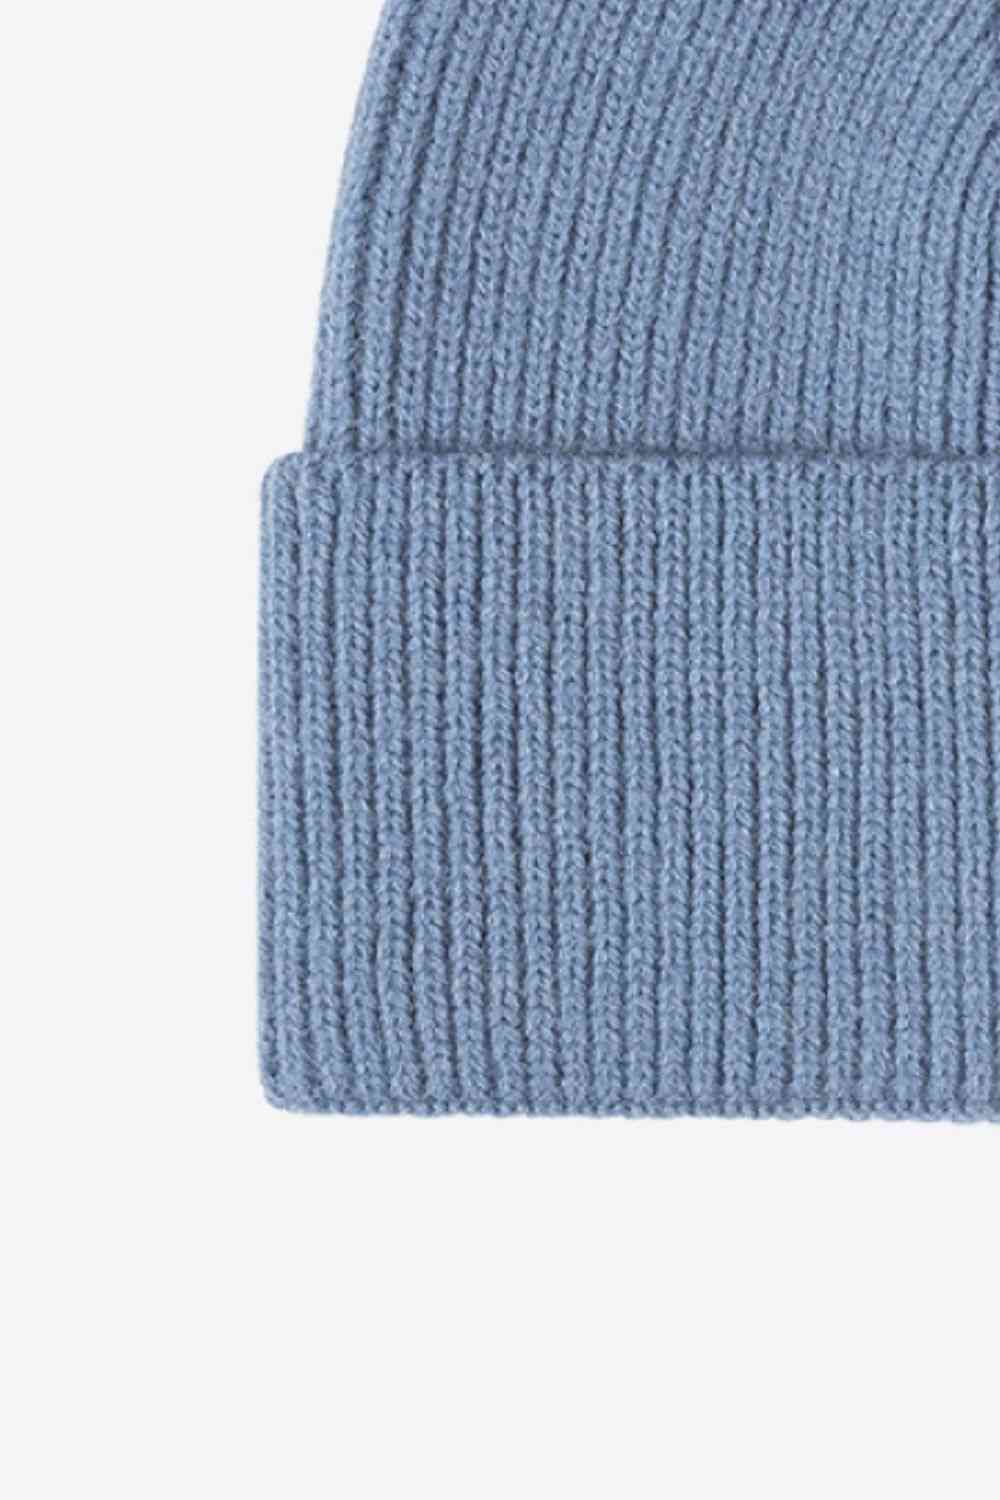 White Smoke Warm In Chilly Days Knit Beanie Winter Accessories